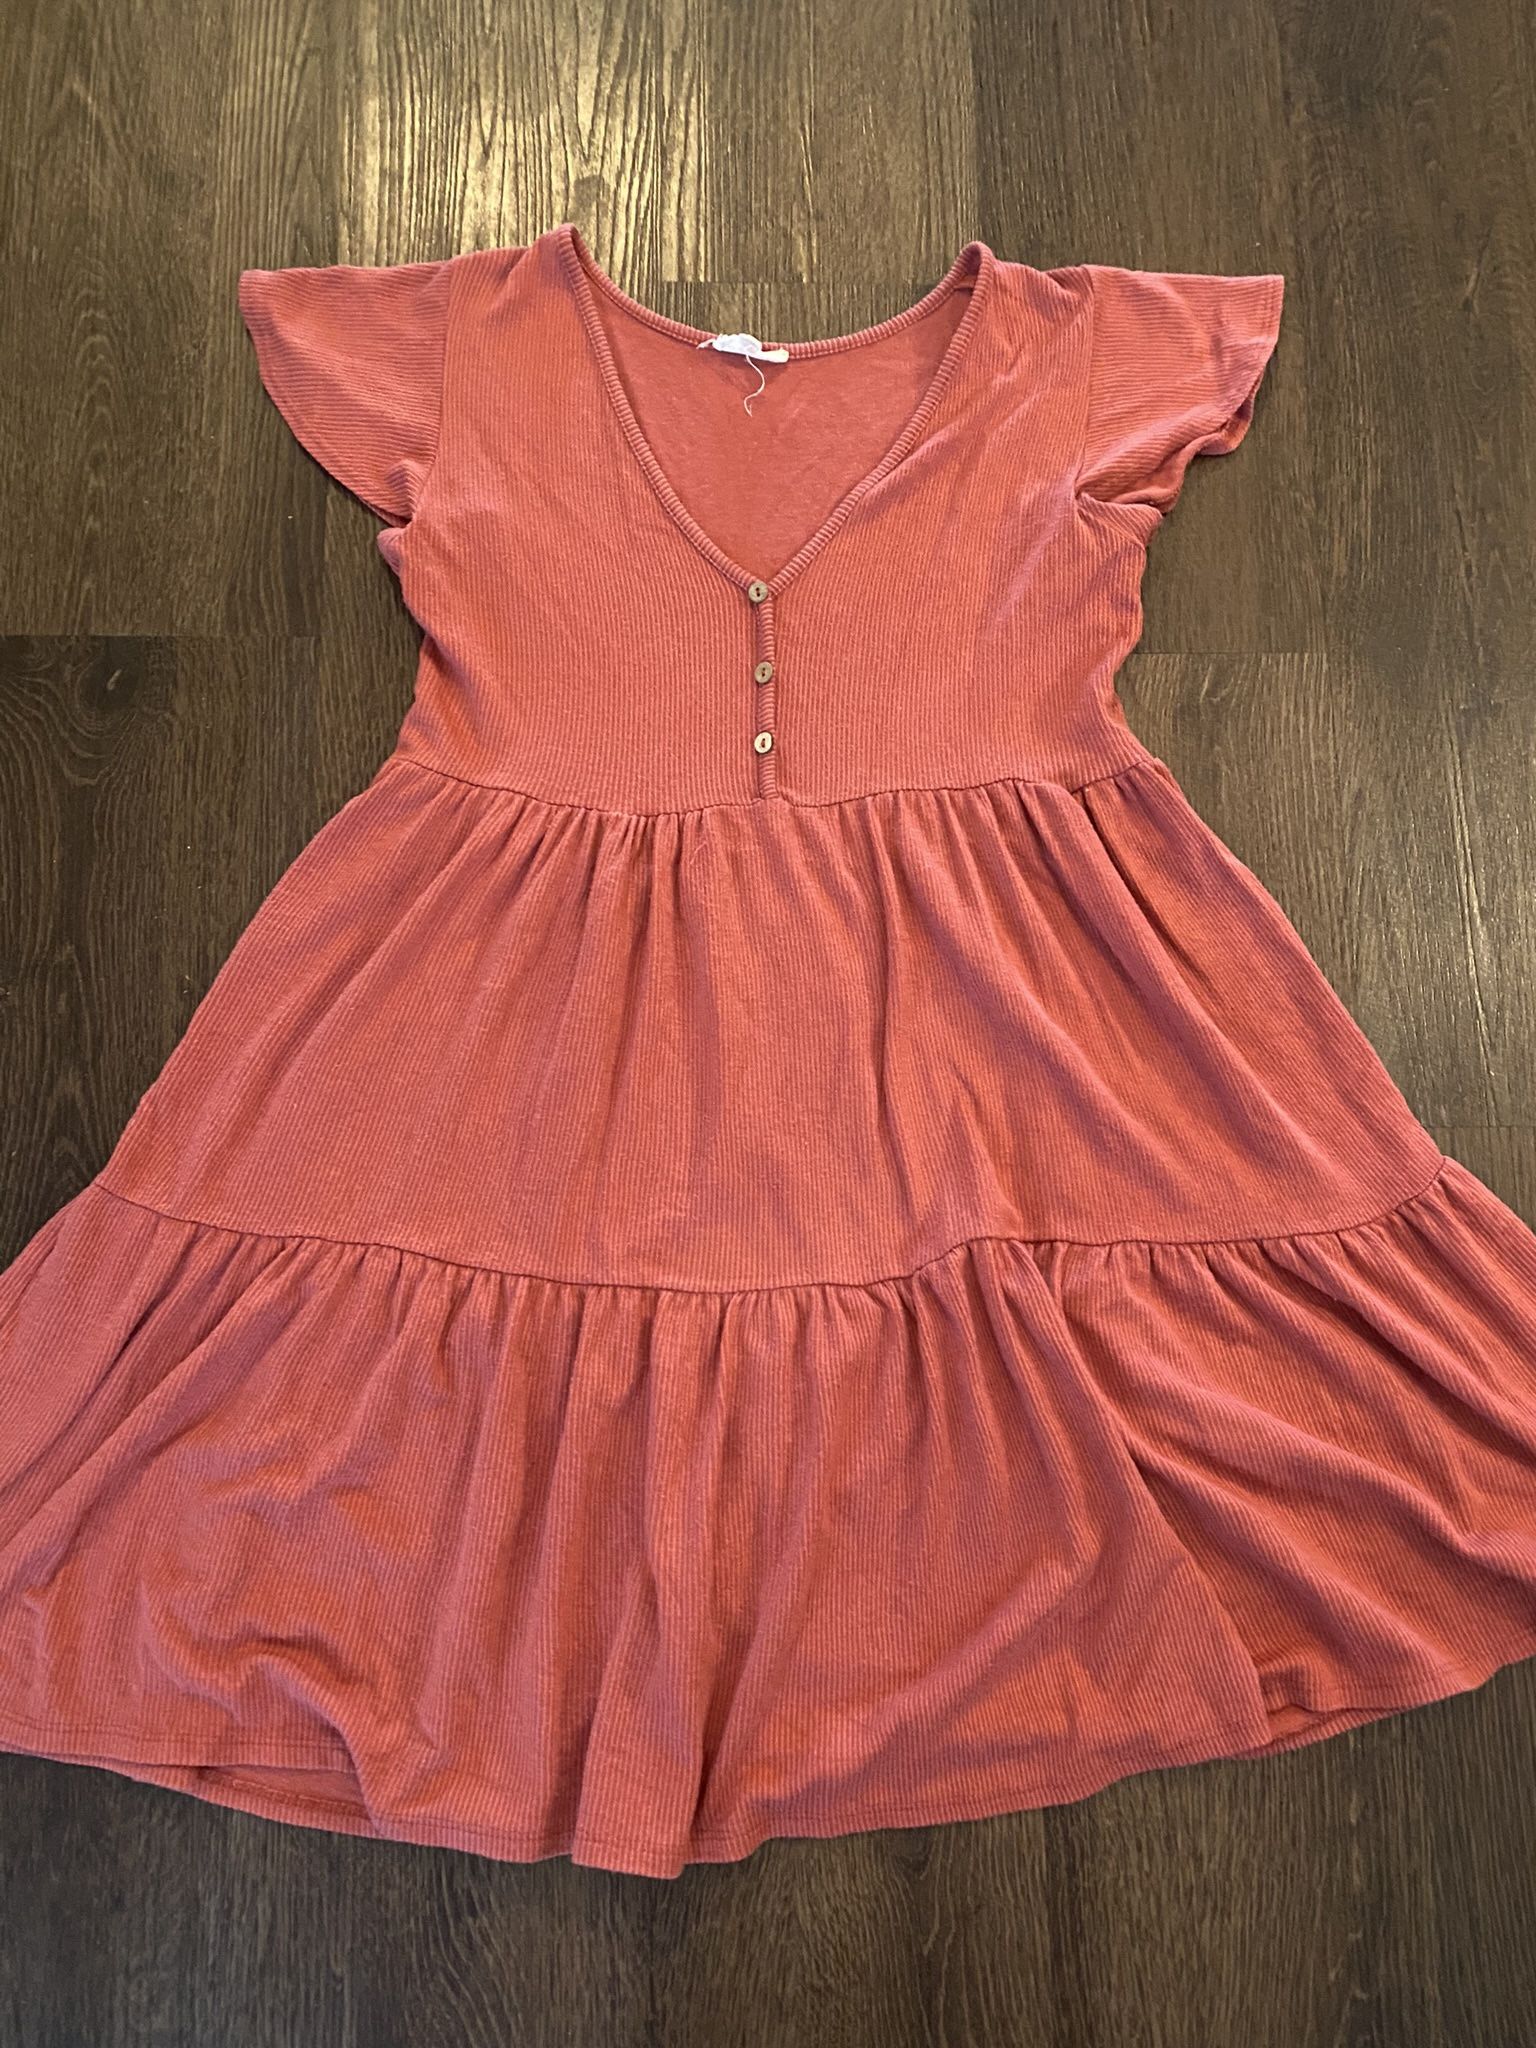 Womans Mauve Pink Shirt Dress Size XL By See You Monday #2